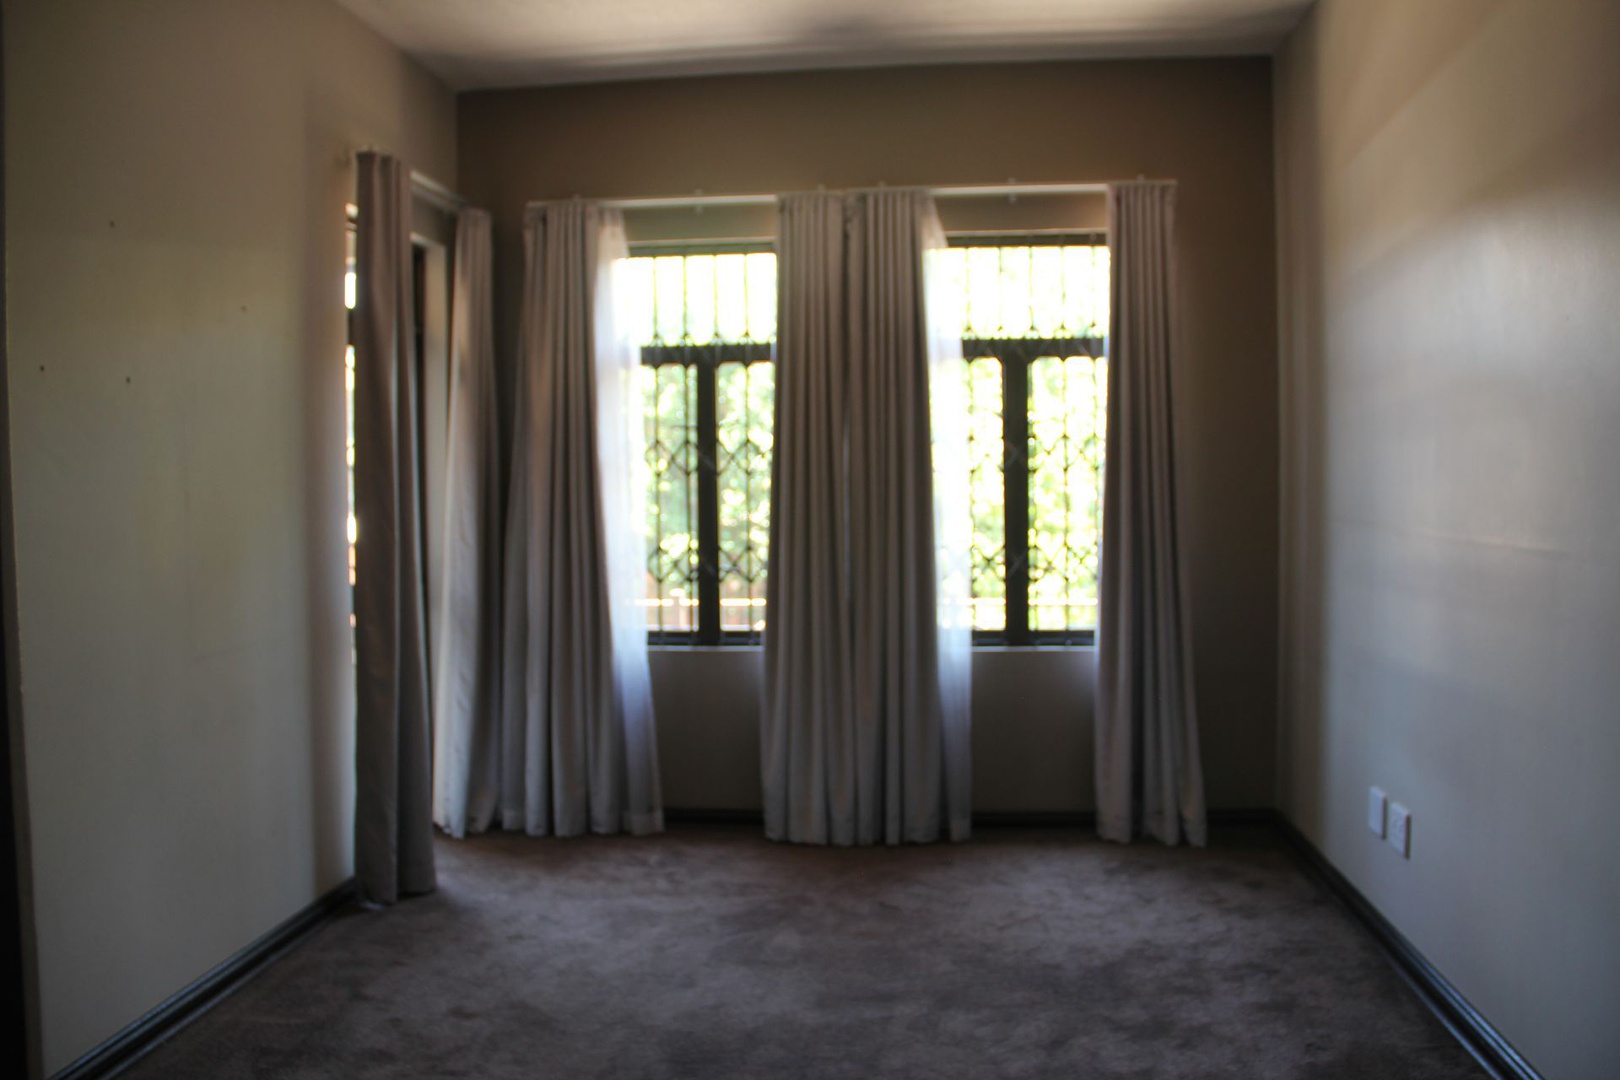 Apartment in Bult - Bedroom 2.JPG